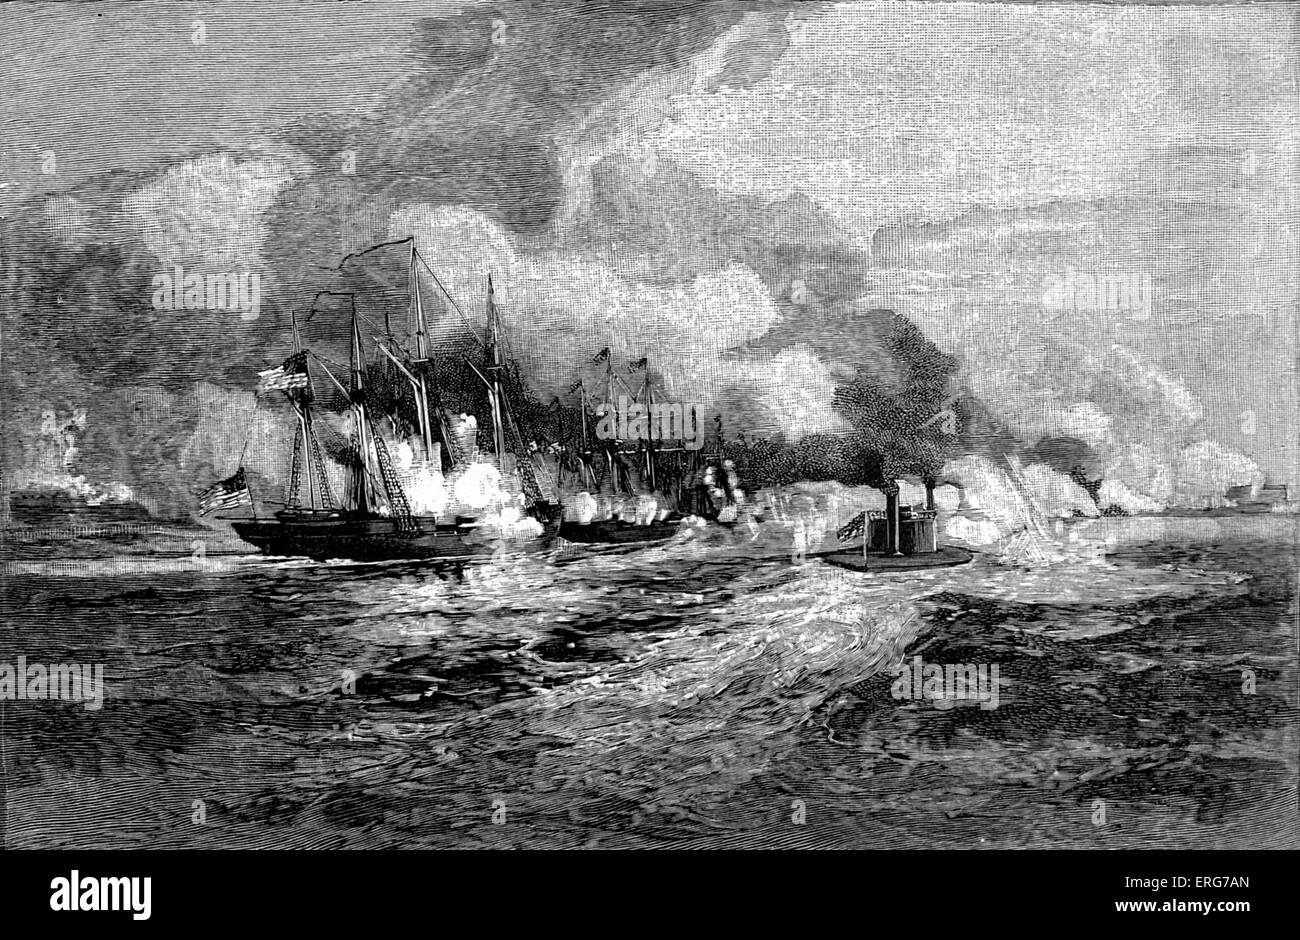 La batalla de Mobile Bay, el 5 de agosto de 1864, a partir de un boceto de guerra. La Guerra Civil Americana. La batalla resultó en la flota europea Foto de stock